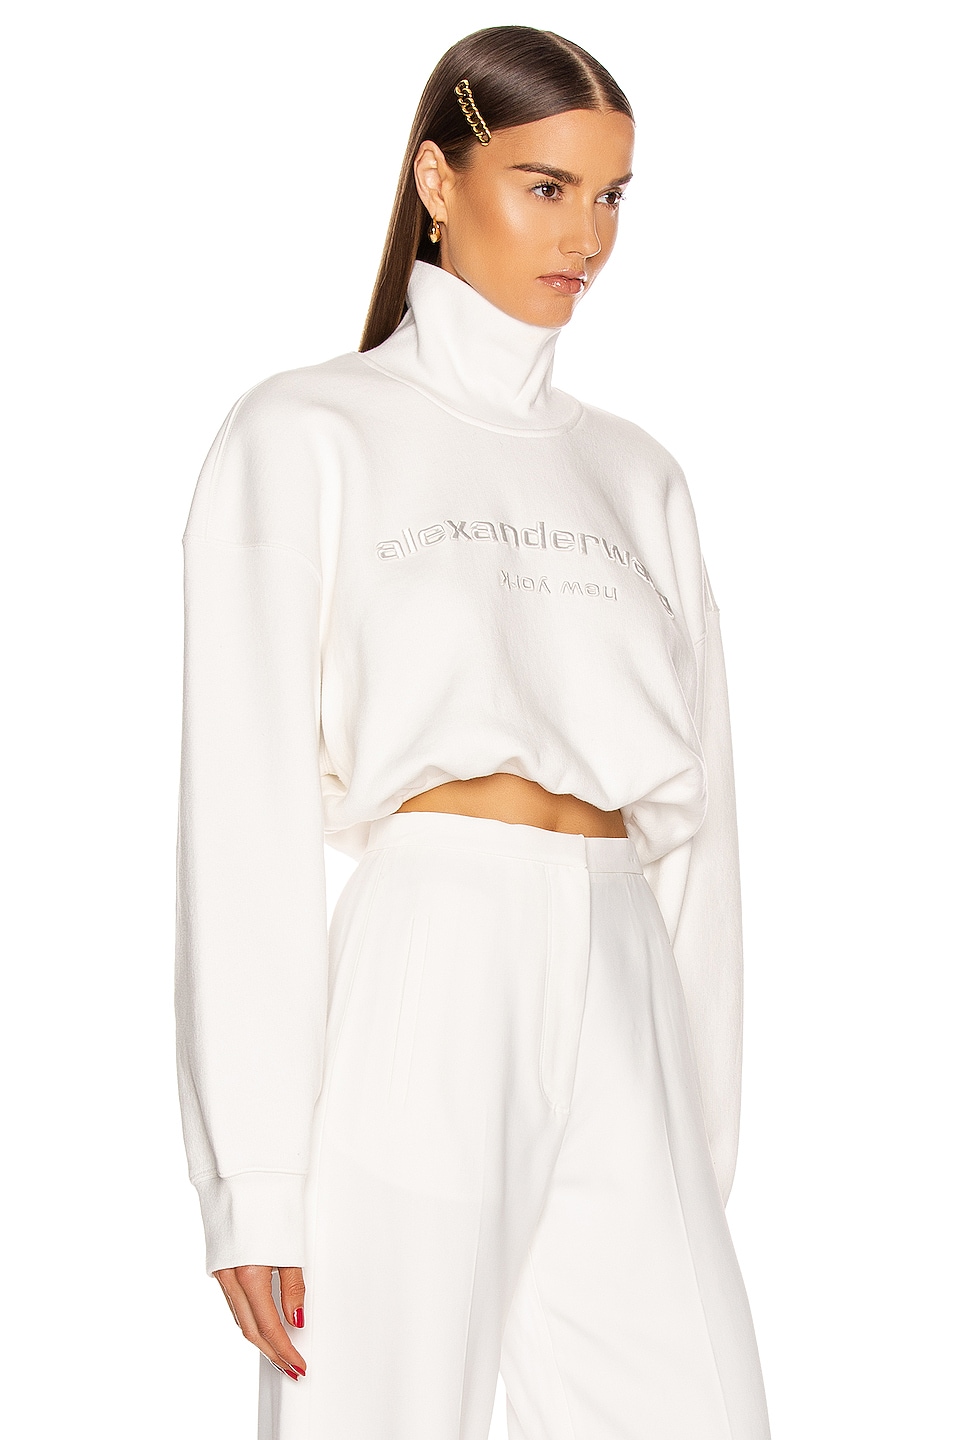 Alexander Wang Cropped Mock Neck Sweatshirt in White | FWRD